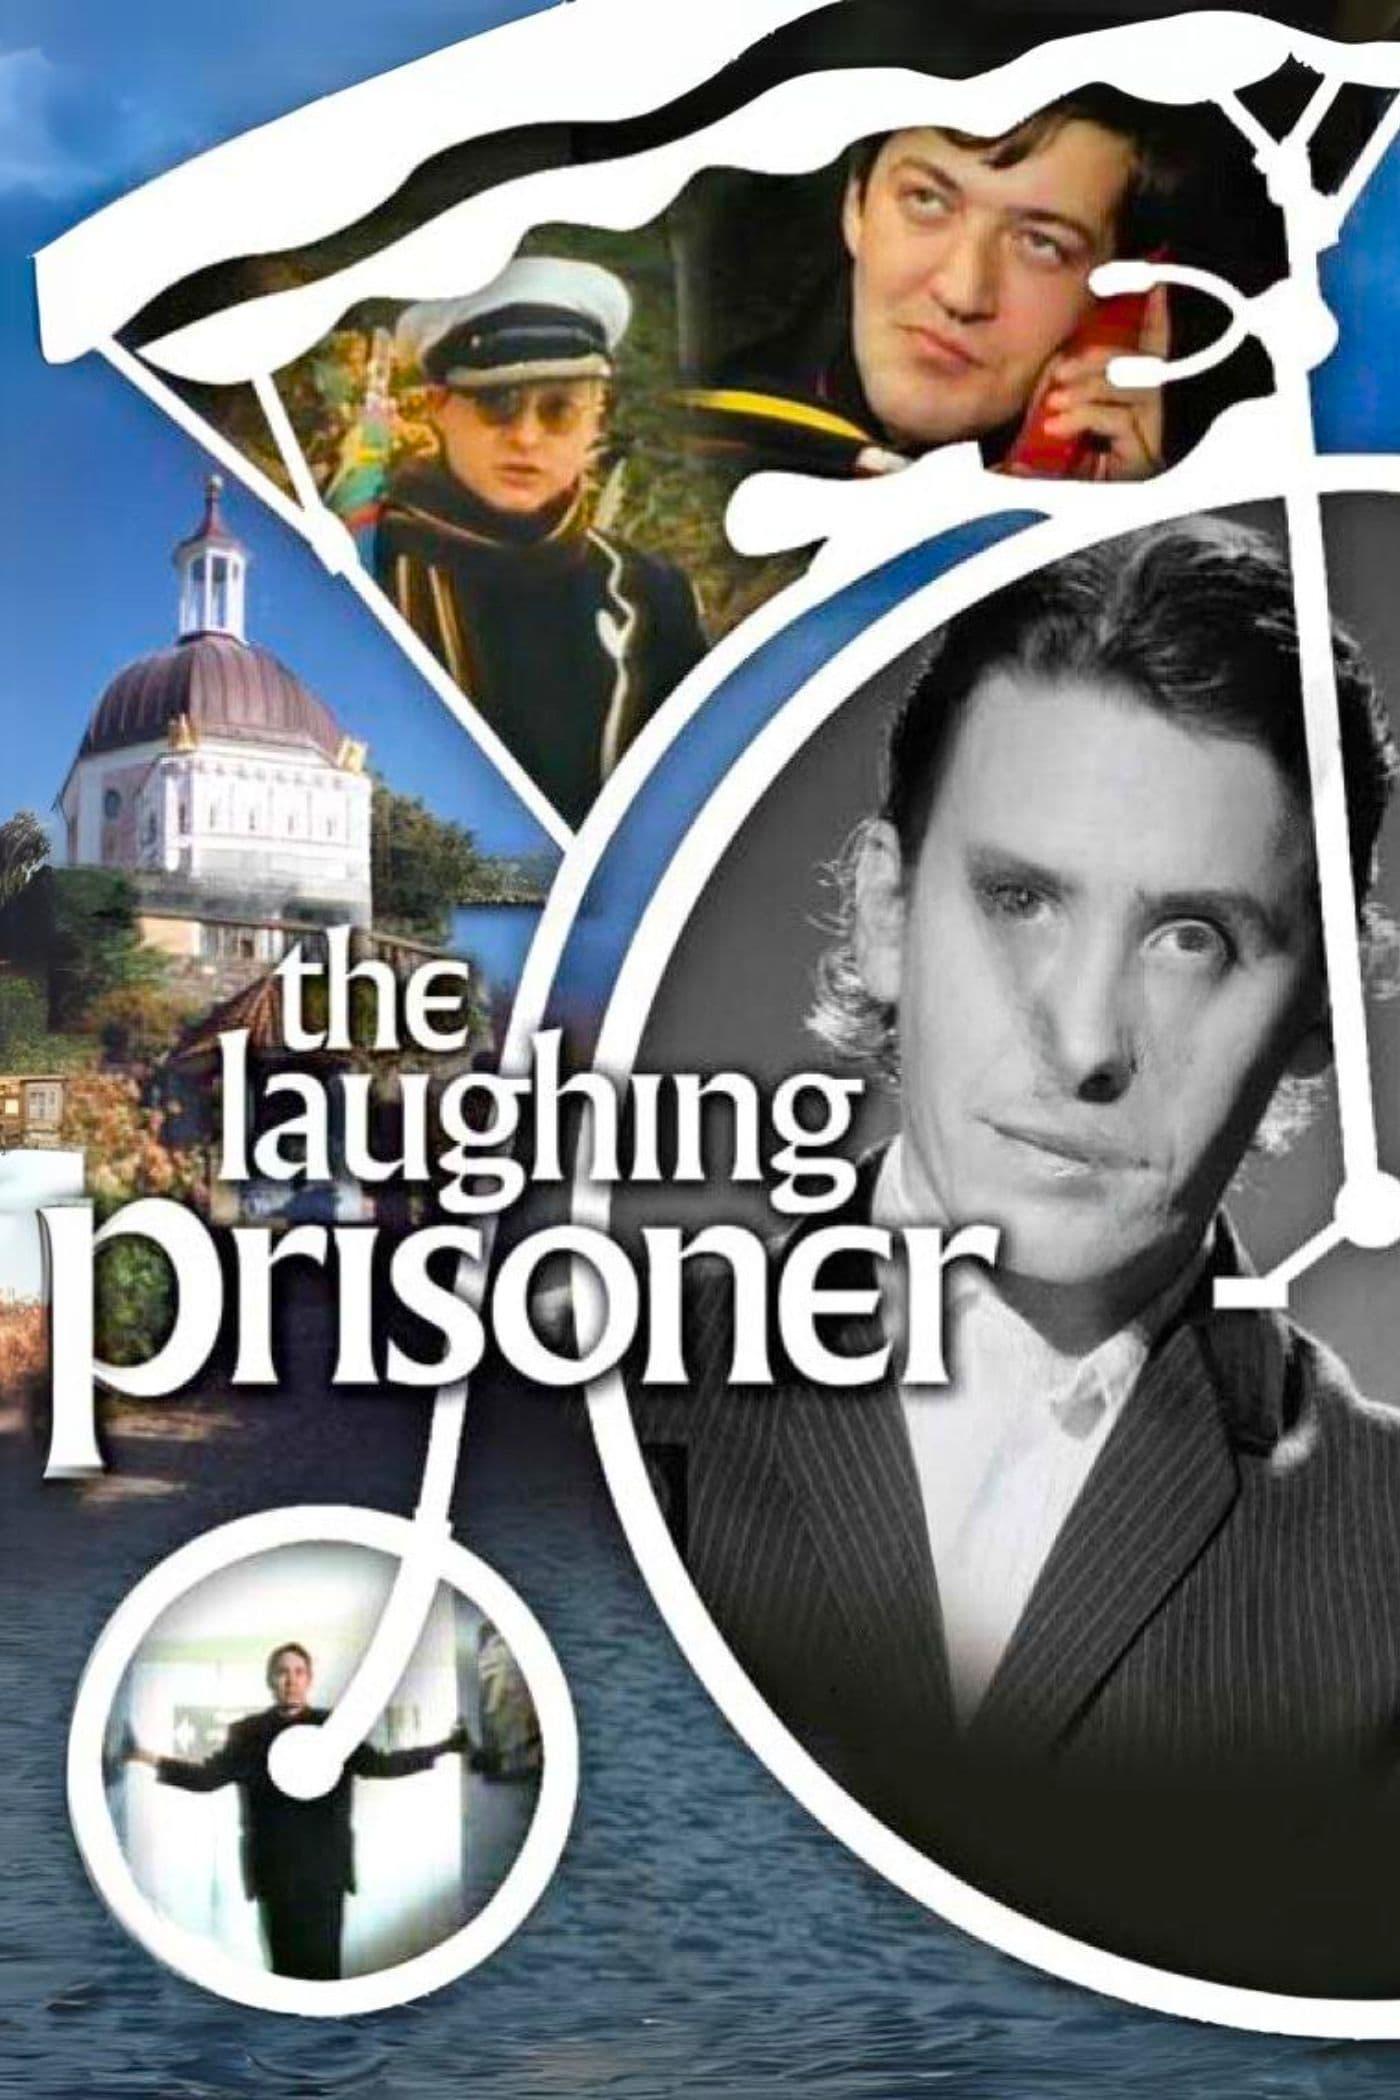 The Laughing Prisoner poster